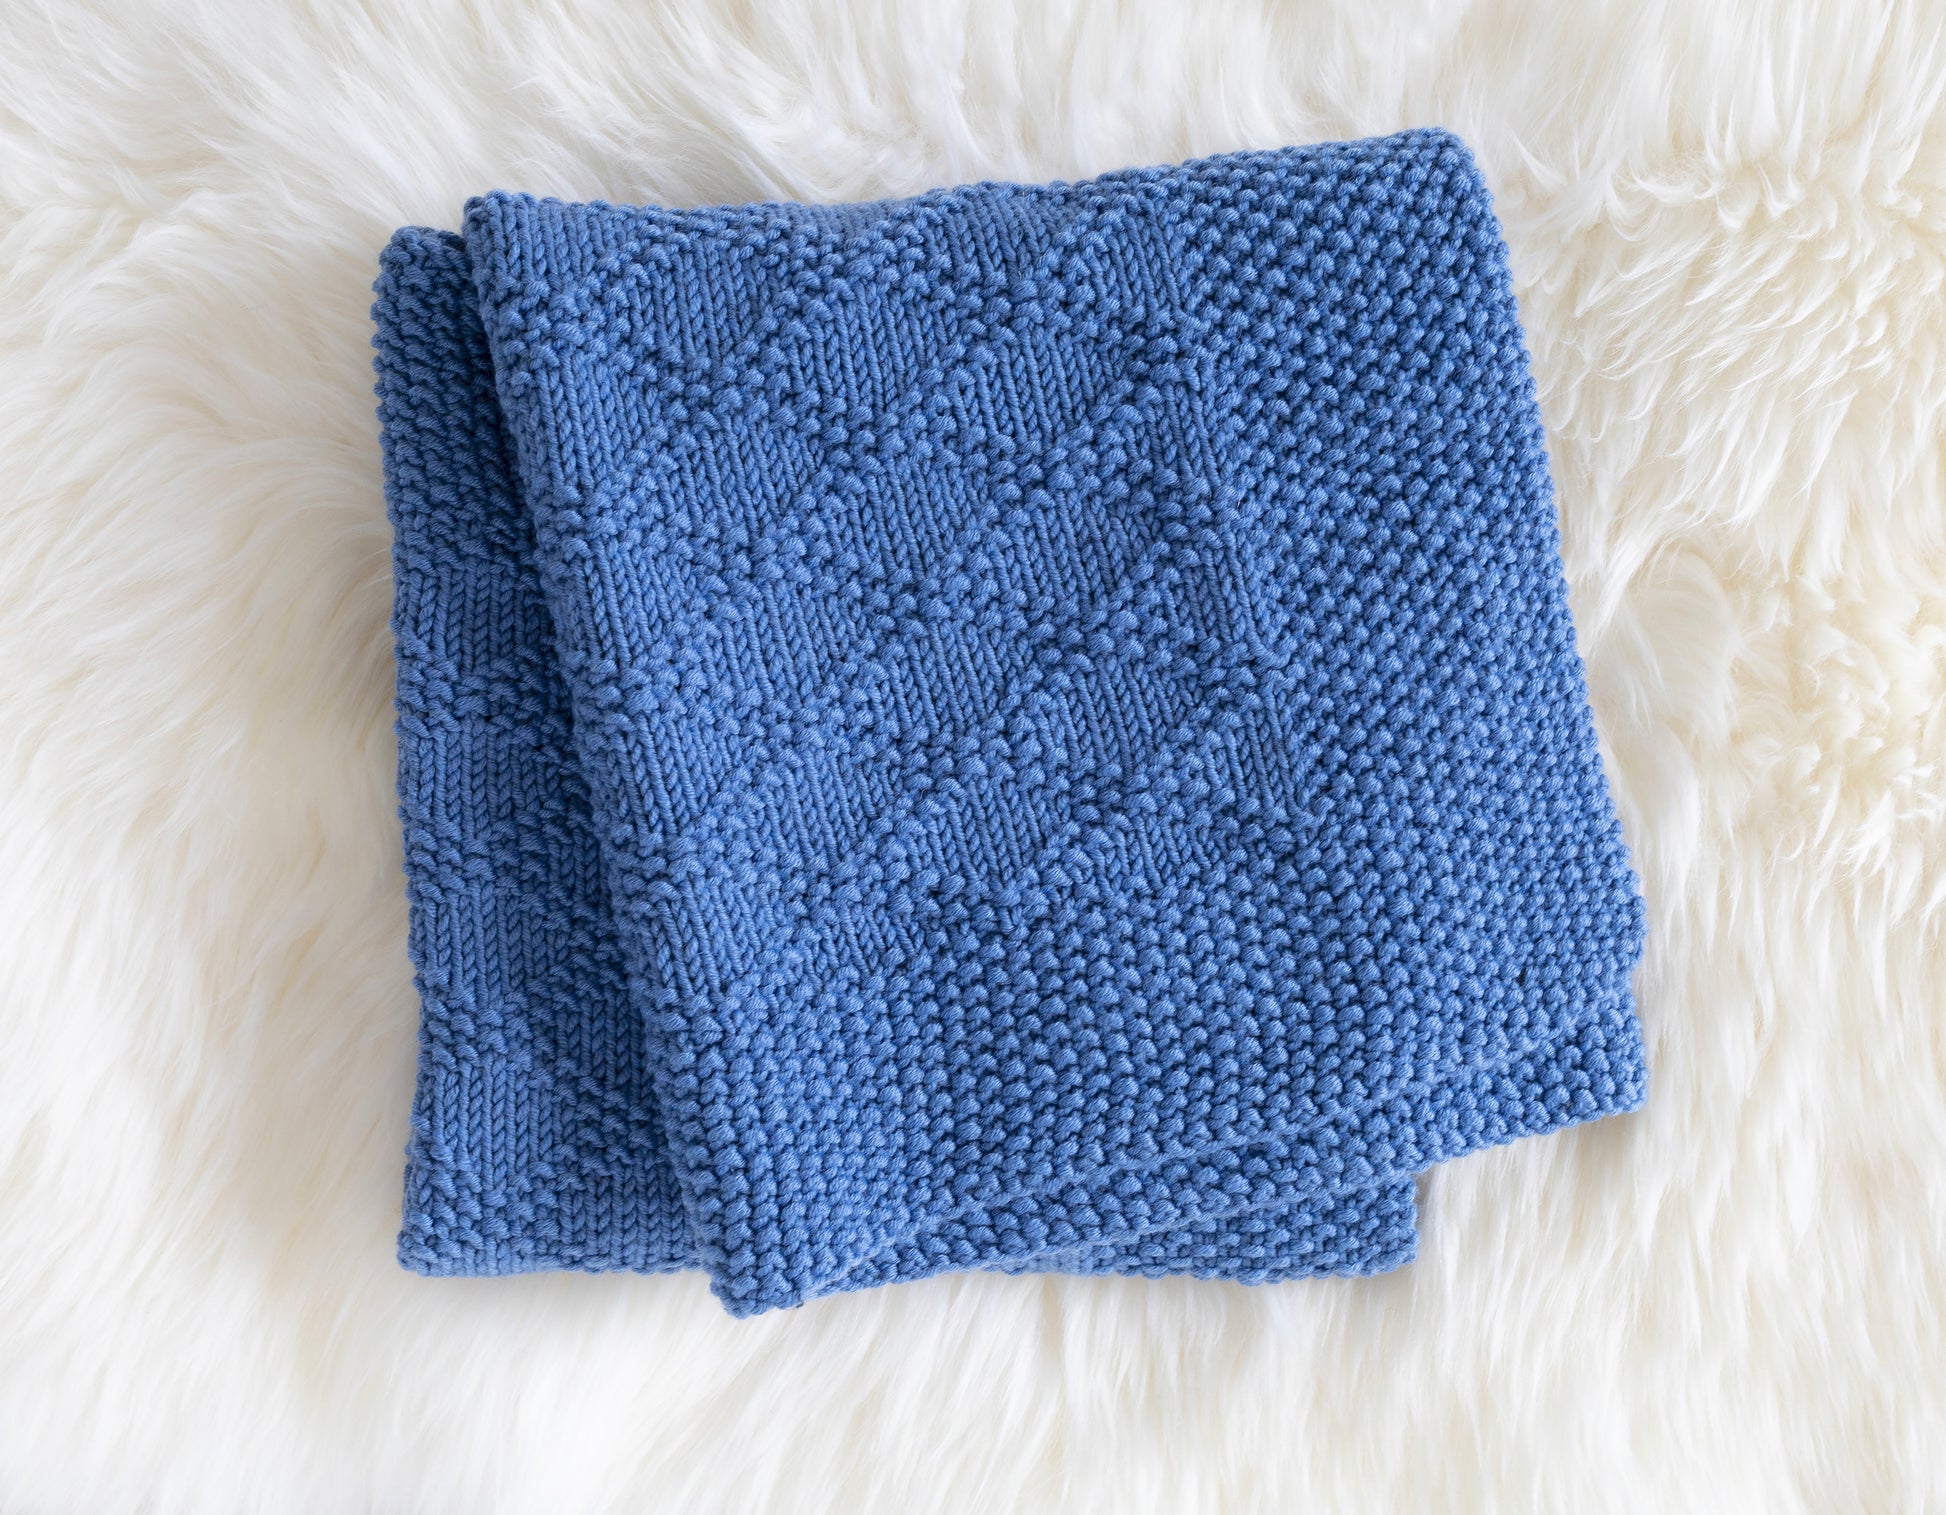 Blue merino wool hand-knitted blanket in Charles Brocade pattern